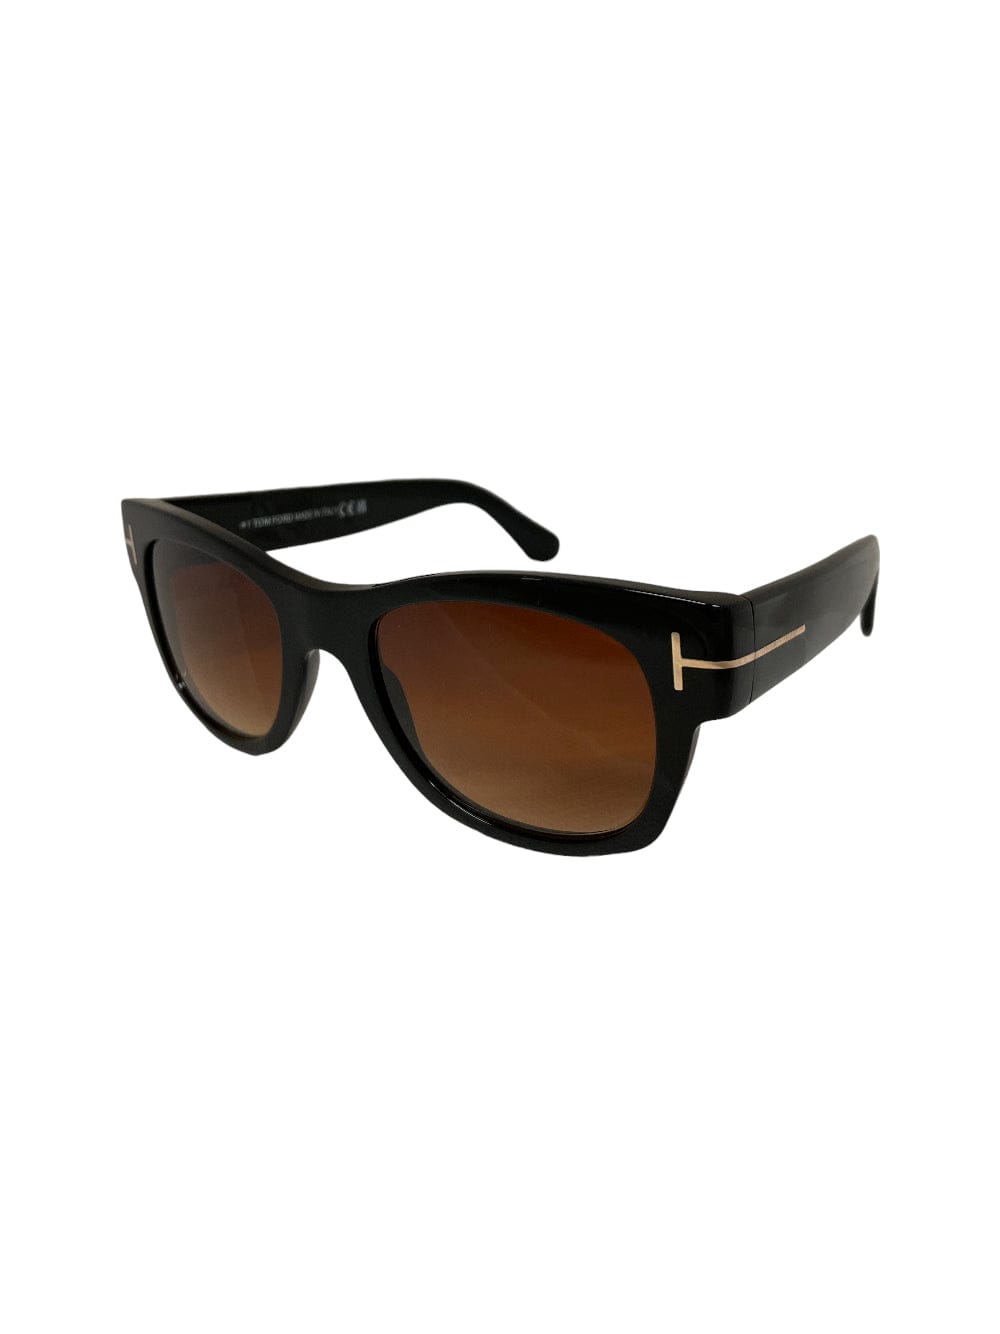 Tom Ford Tf 5040/s - Black Sunglasses